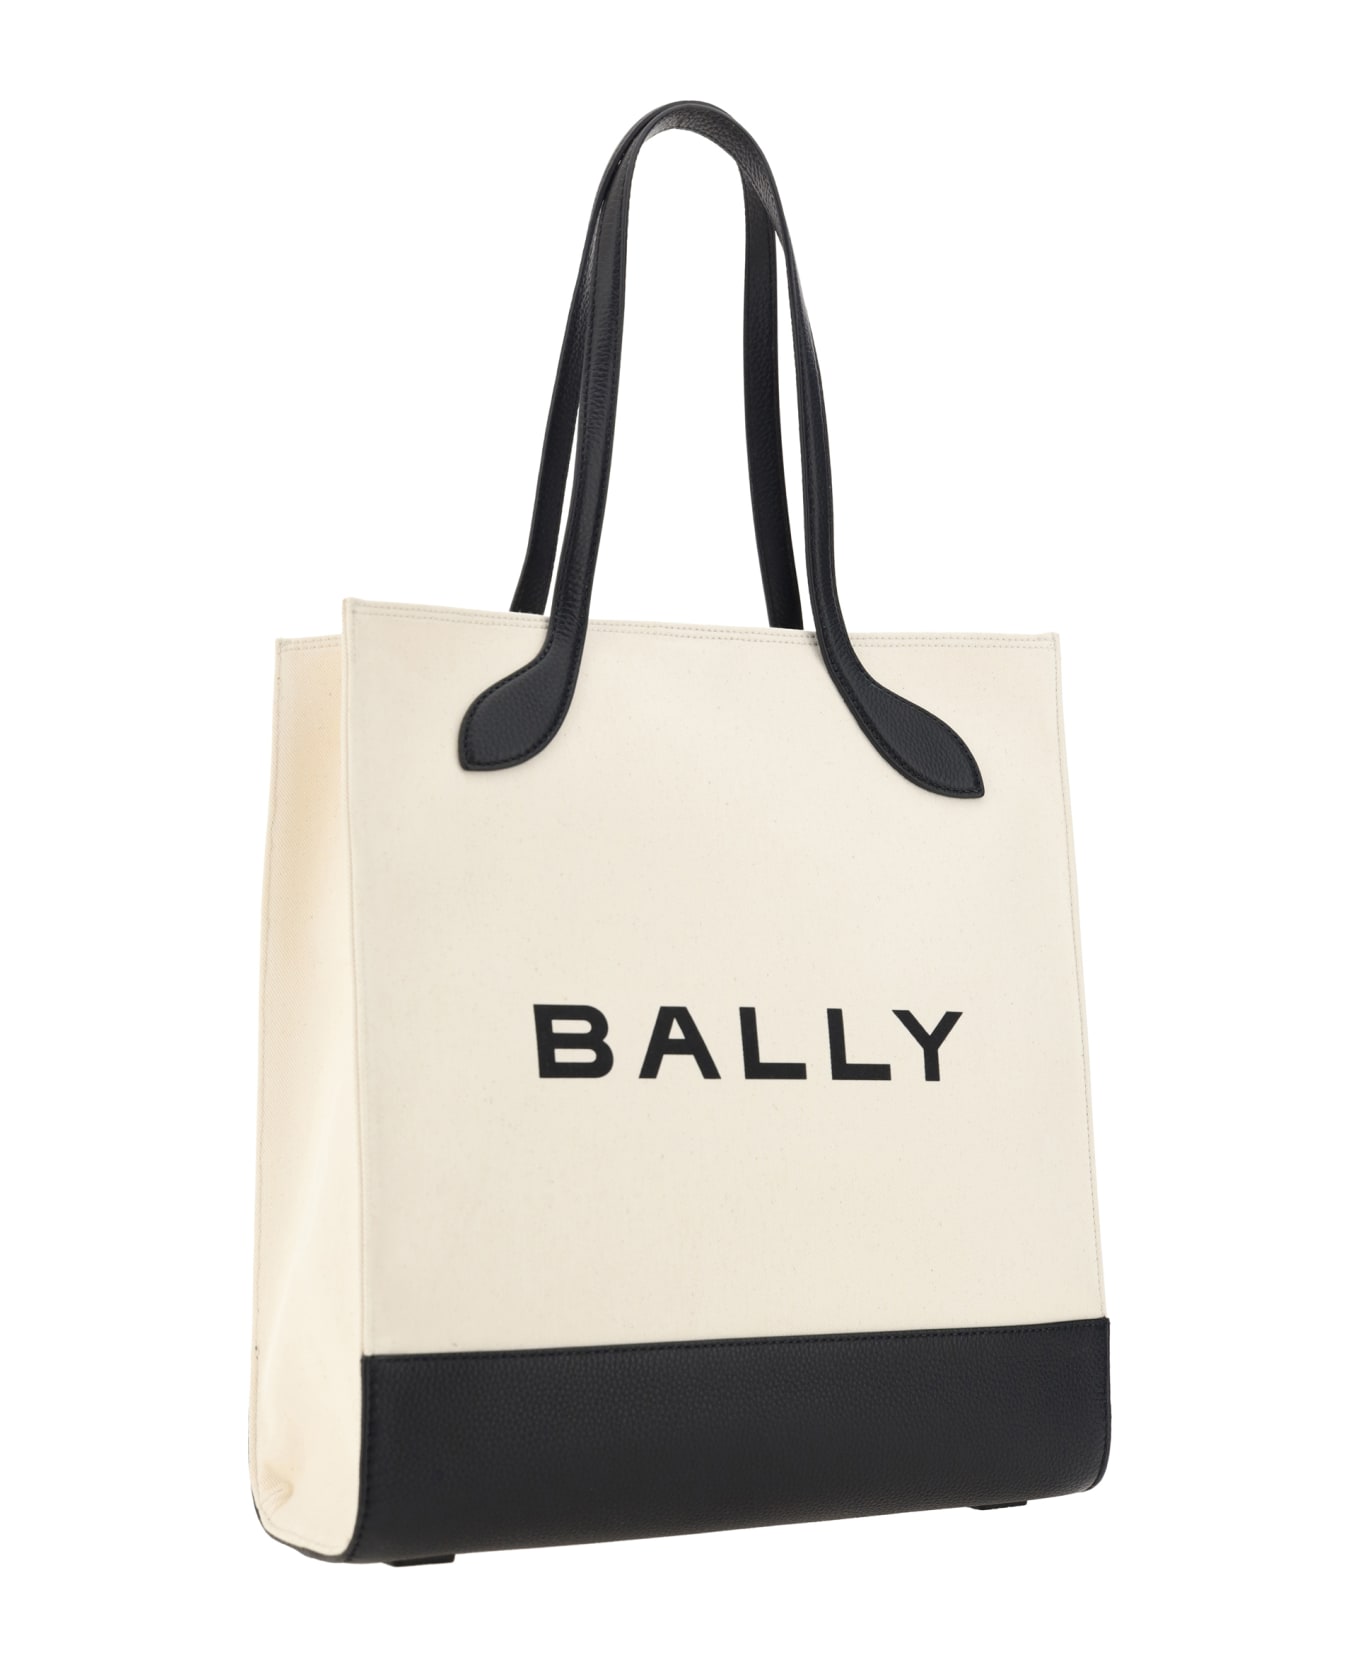 Bally Tote Shoulder Bag - Natural